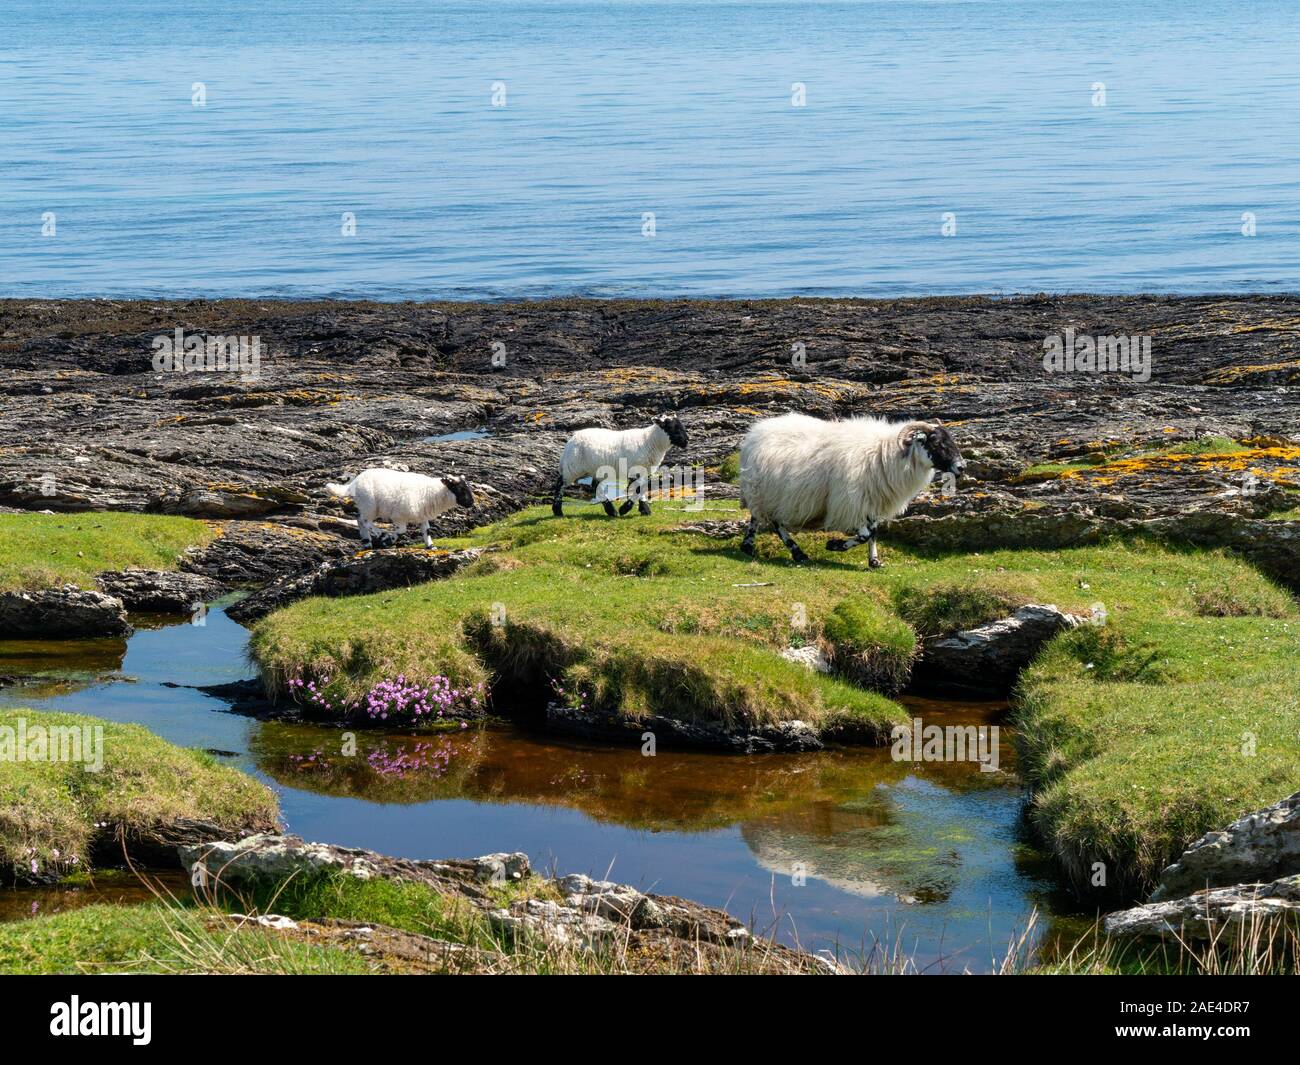 Blackface Ewe and two lambs on the seashore on the Isle of Colonsay, Scotland, UK Stock Photo